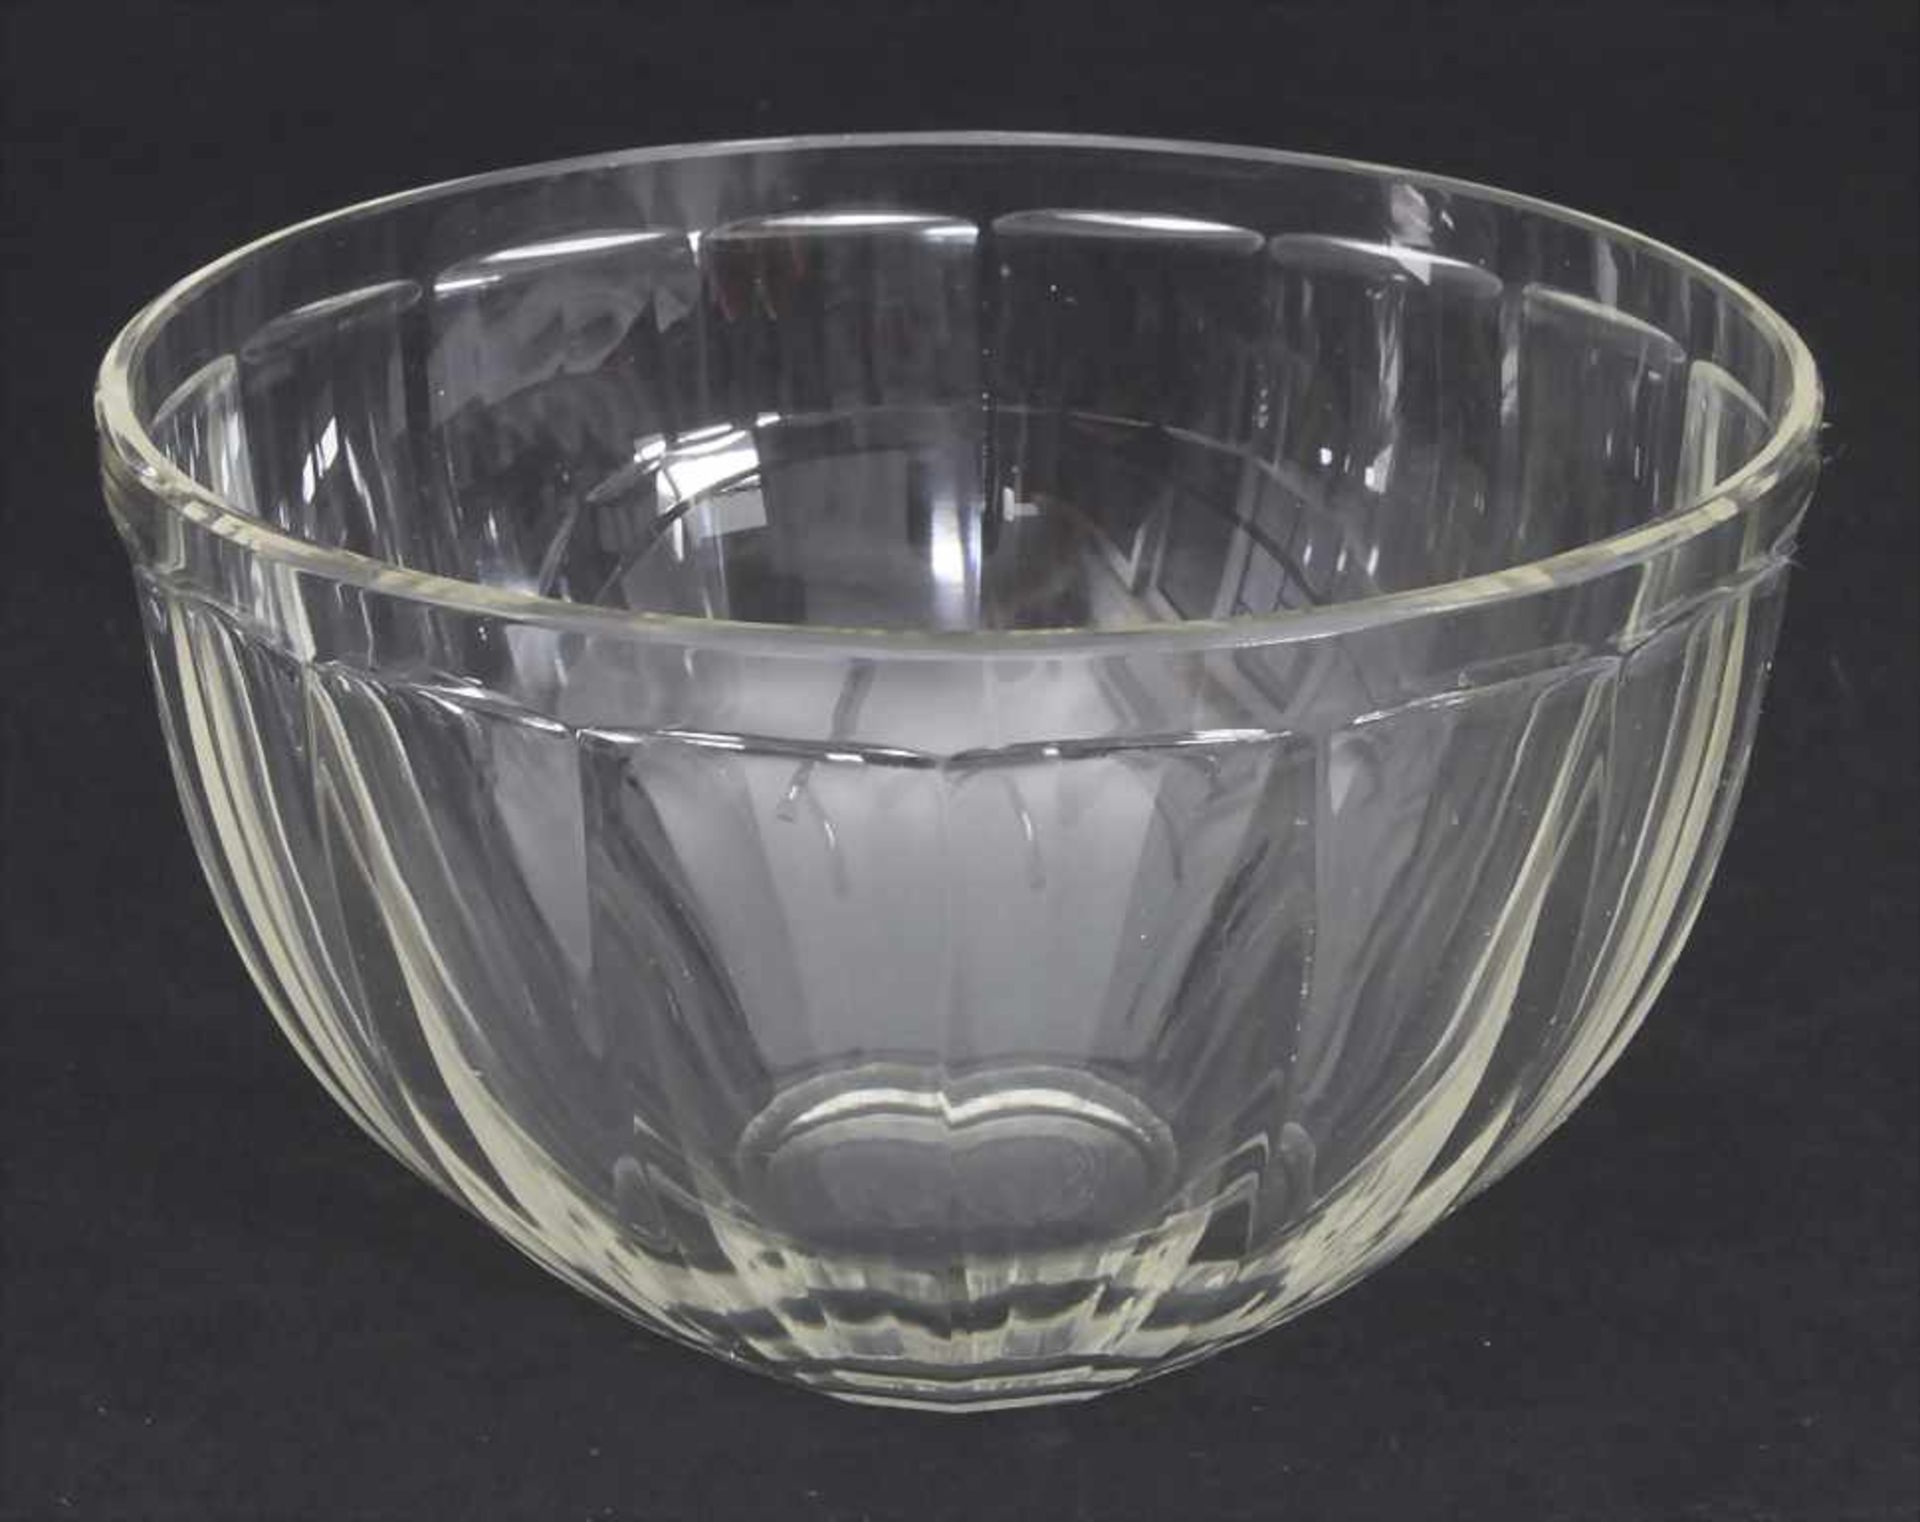 4 Glasschüsseln / 4 glass bowls, J. & L. Lobmeyr, Wien, um 1900< - Image 2 of 2